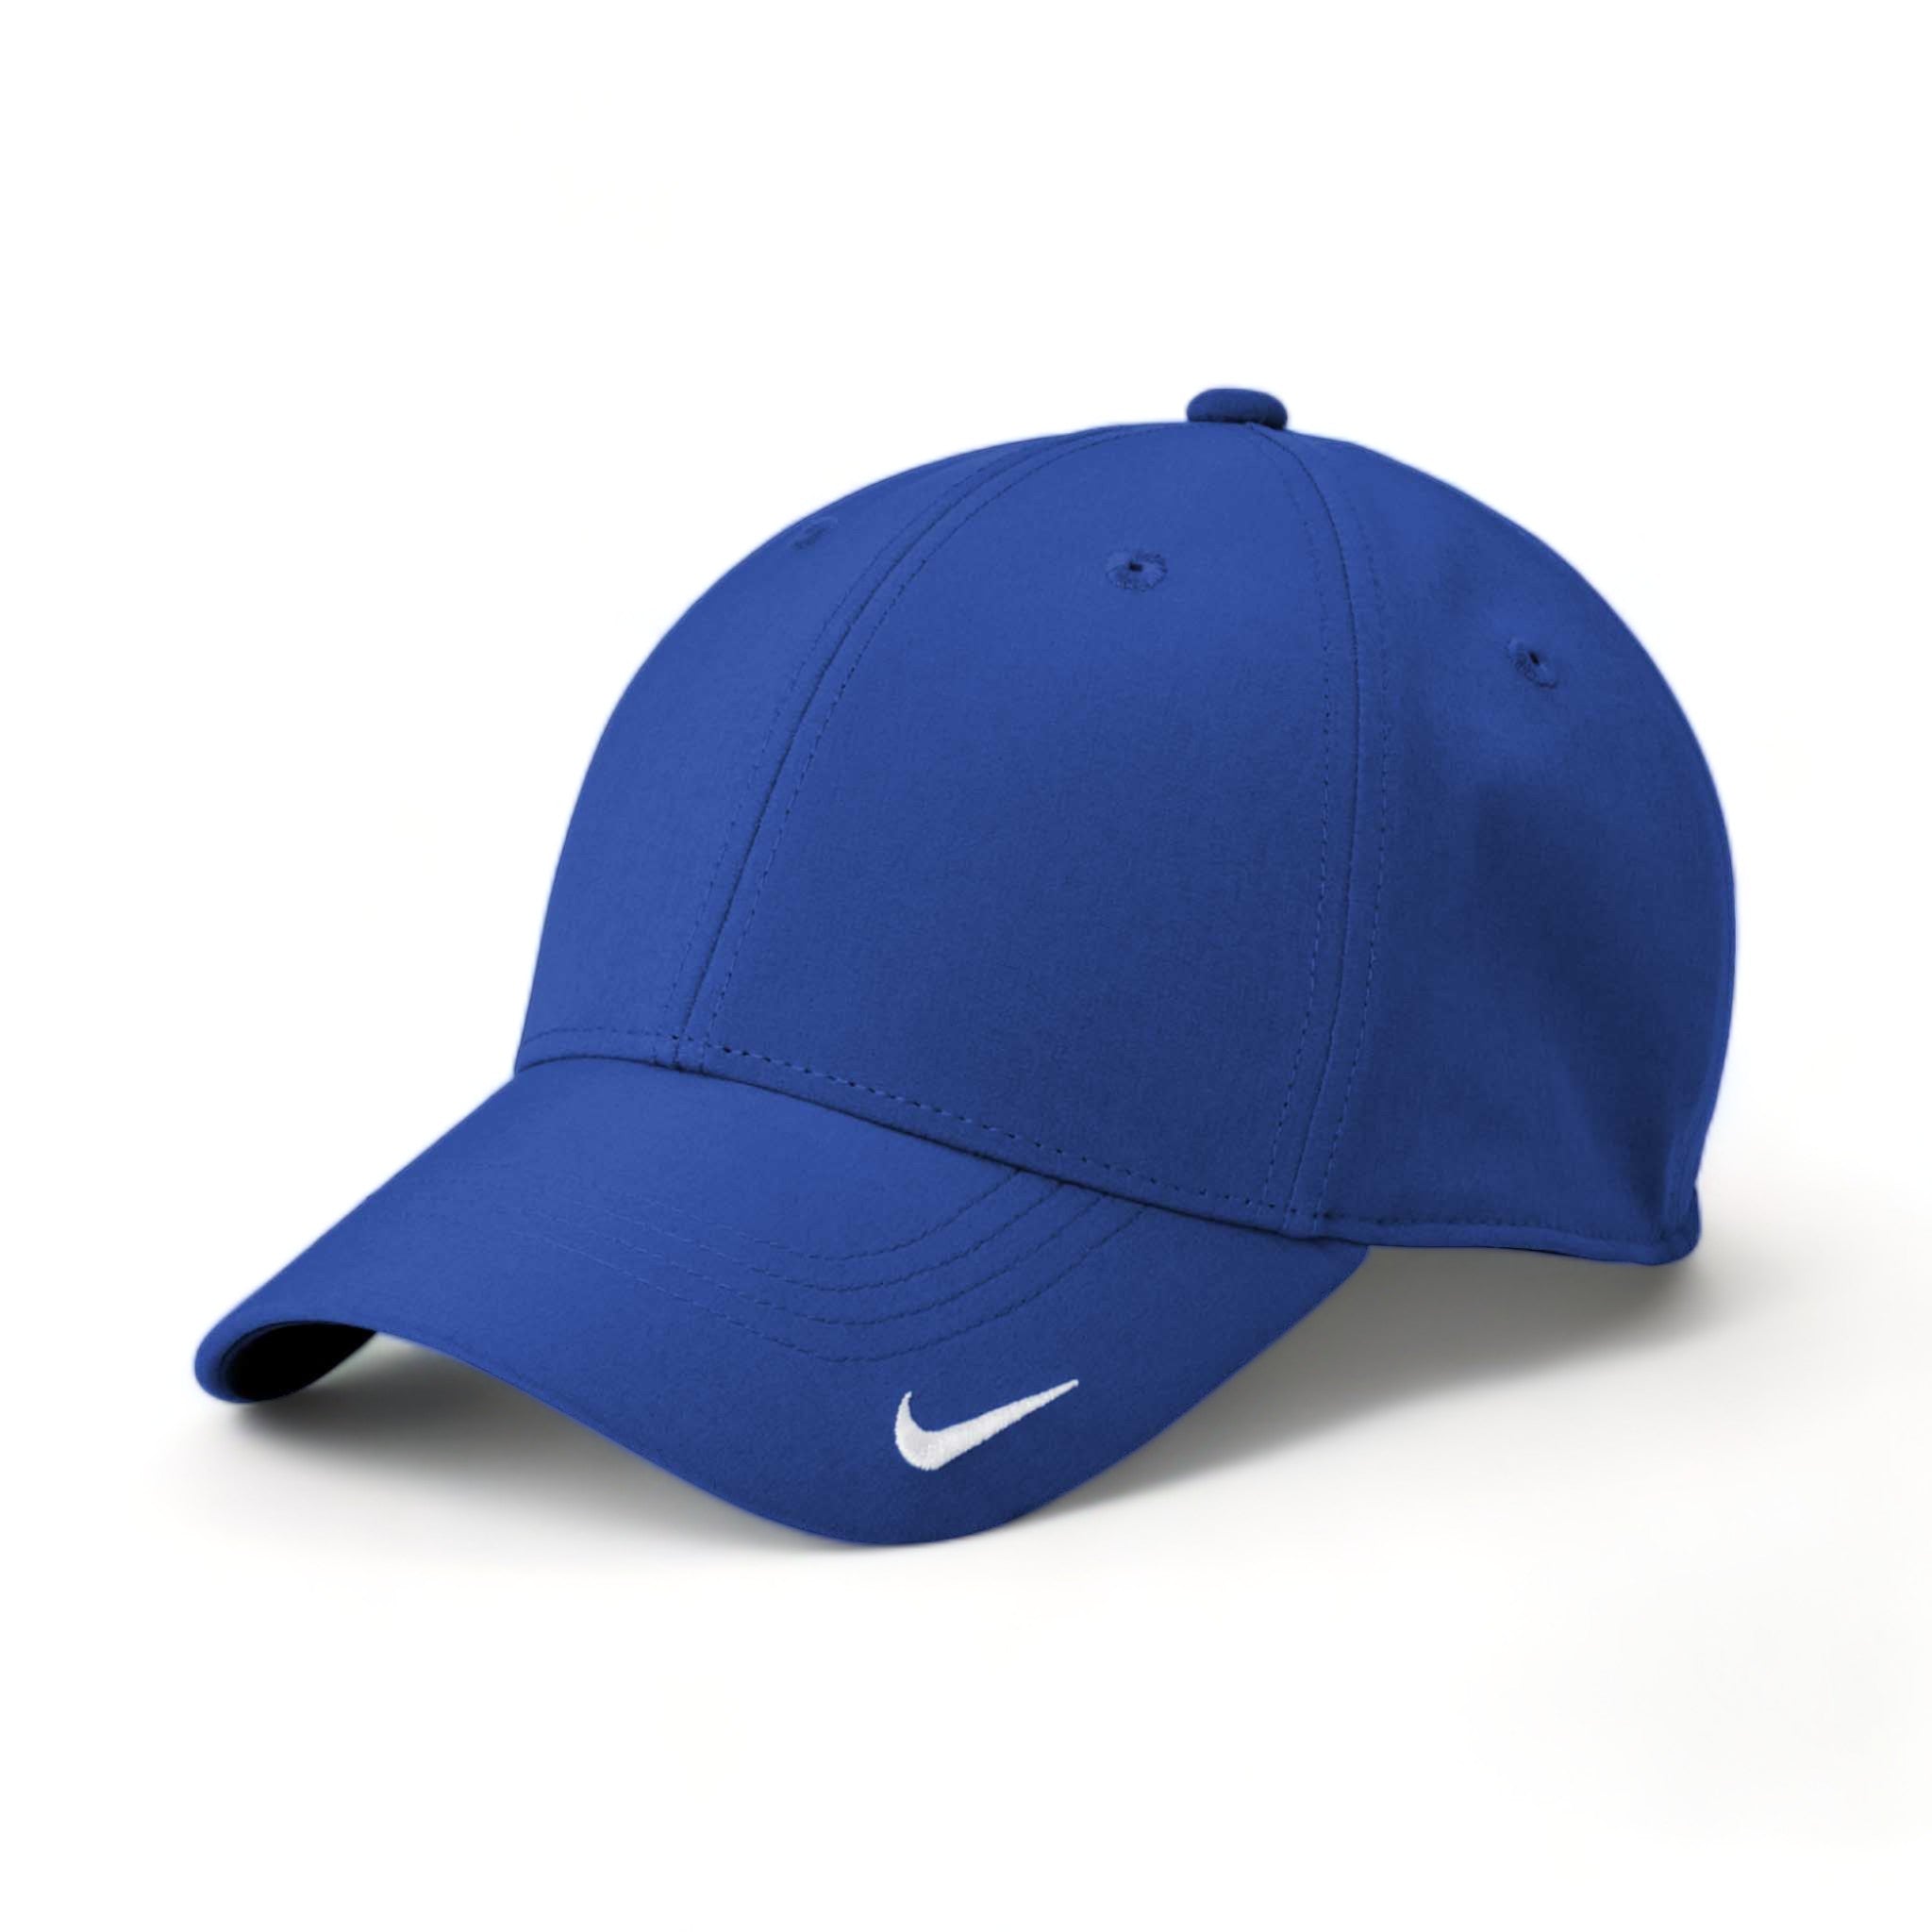 Side view of Nike NKFB6447 custom hat in game royal